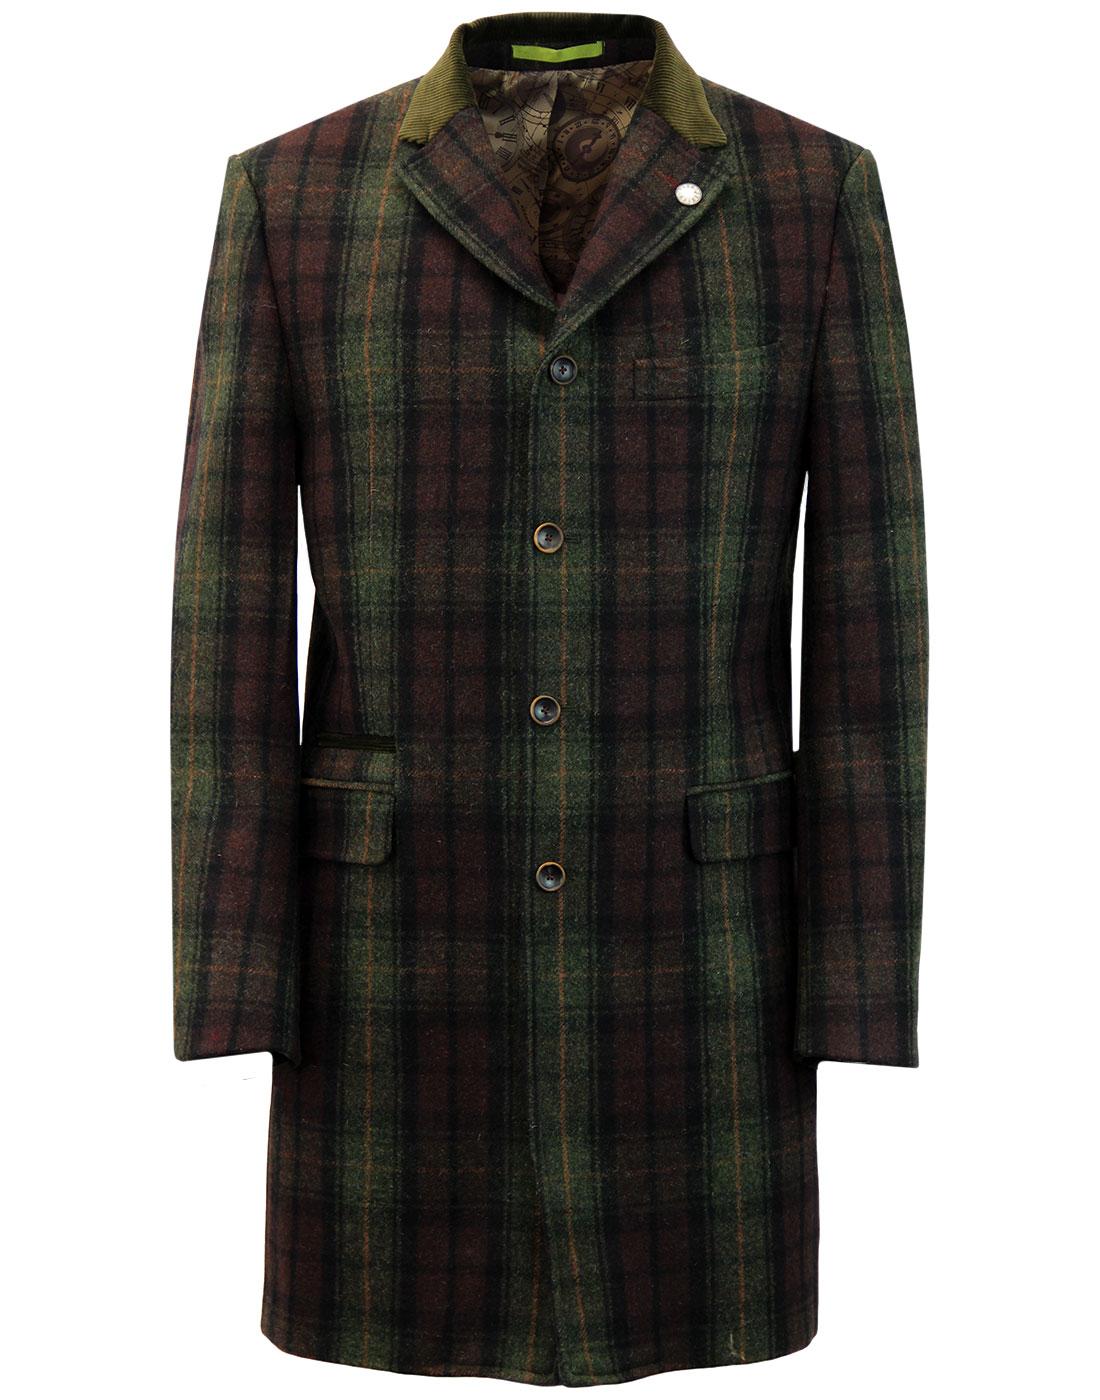 Winnie GIBSON LONDON 3/4 Length Cord Collar Coat G